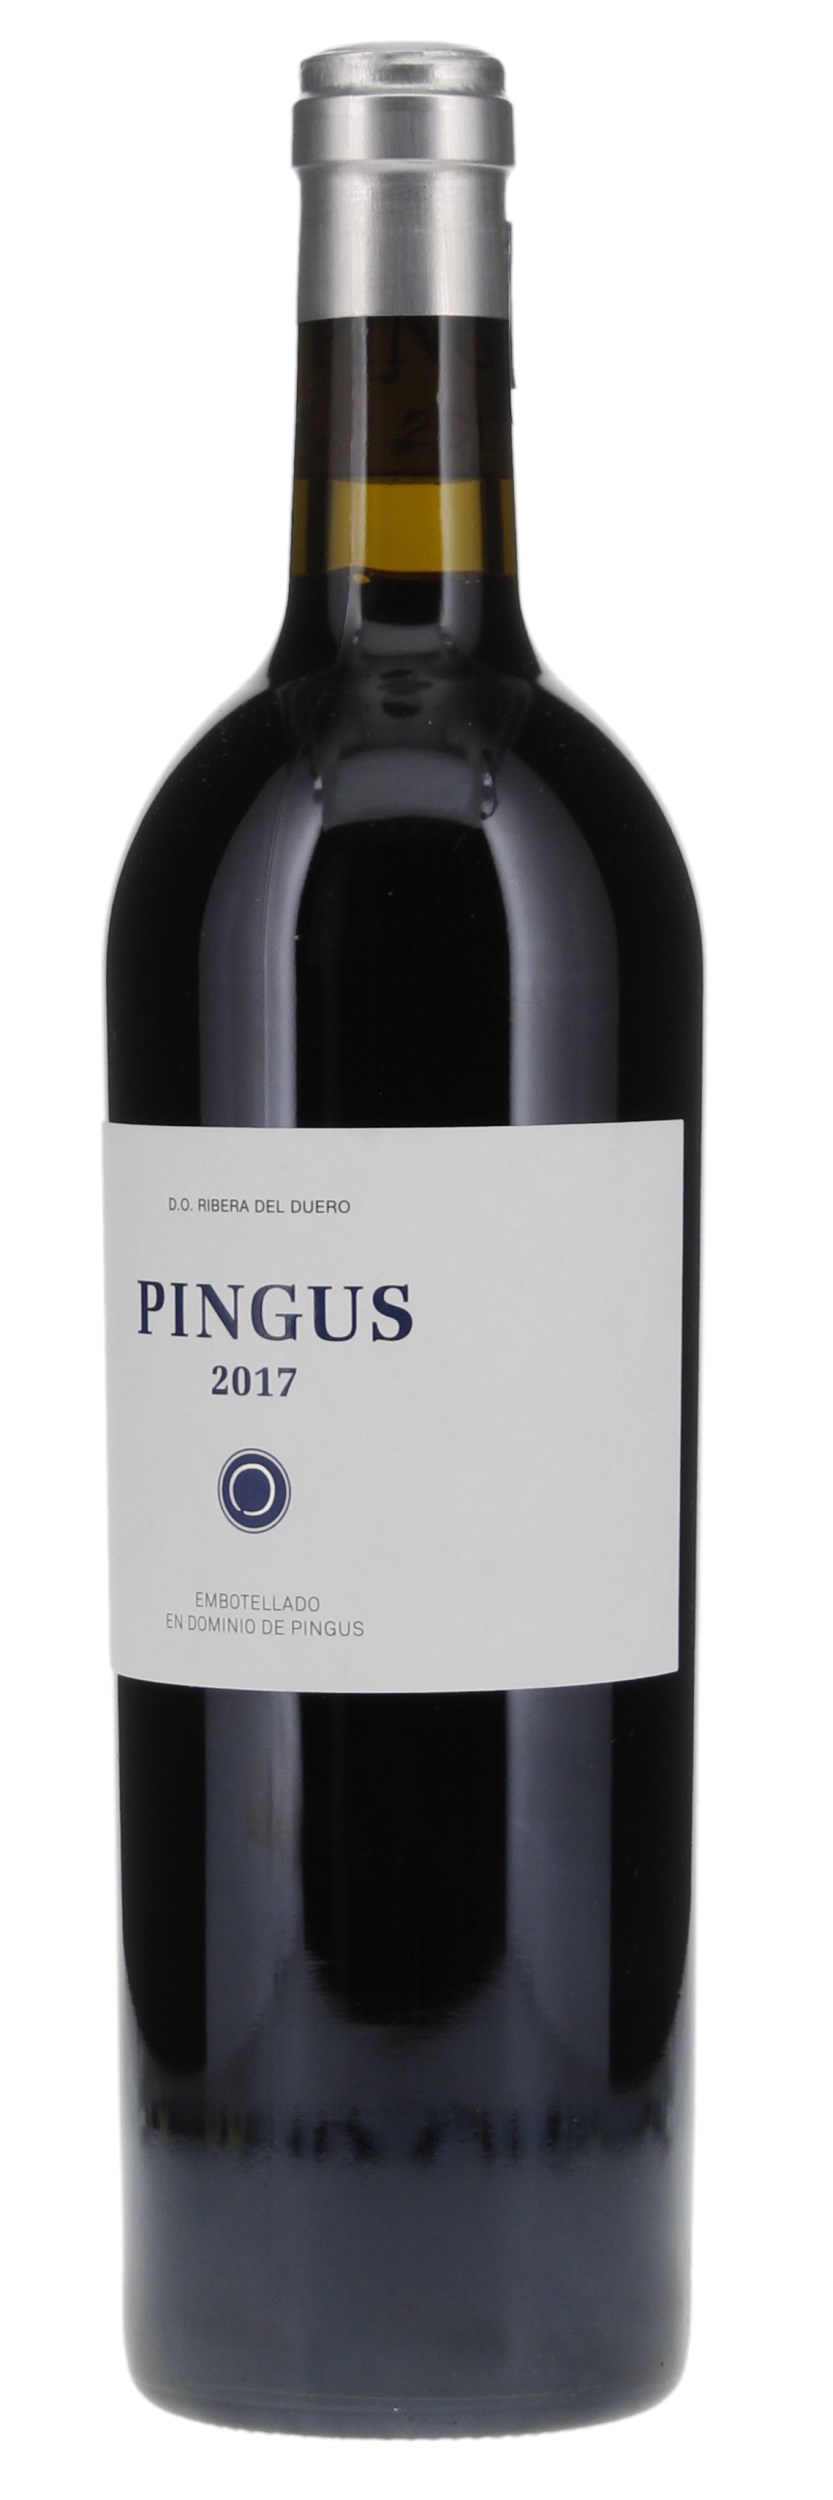 2017 Dominio de Pingus "Pingus", 750ml